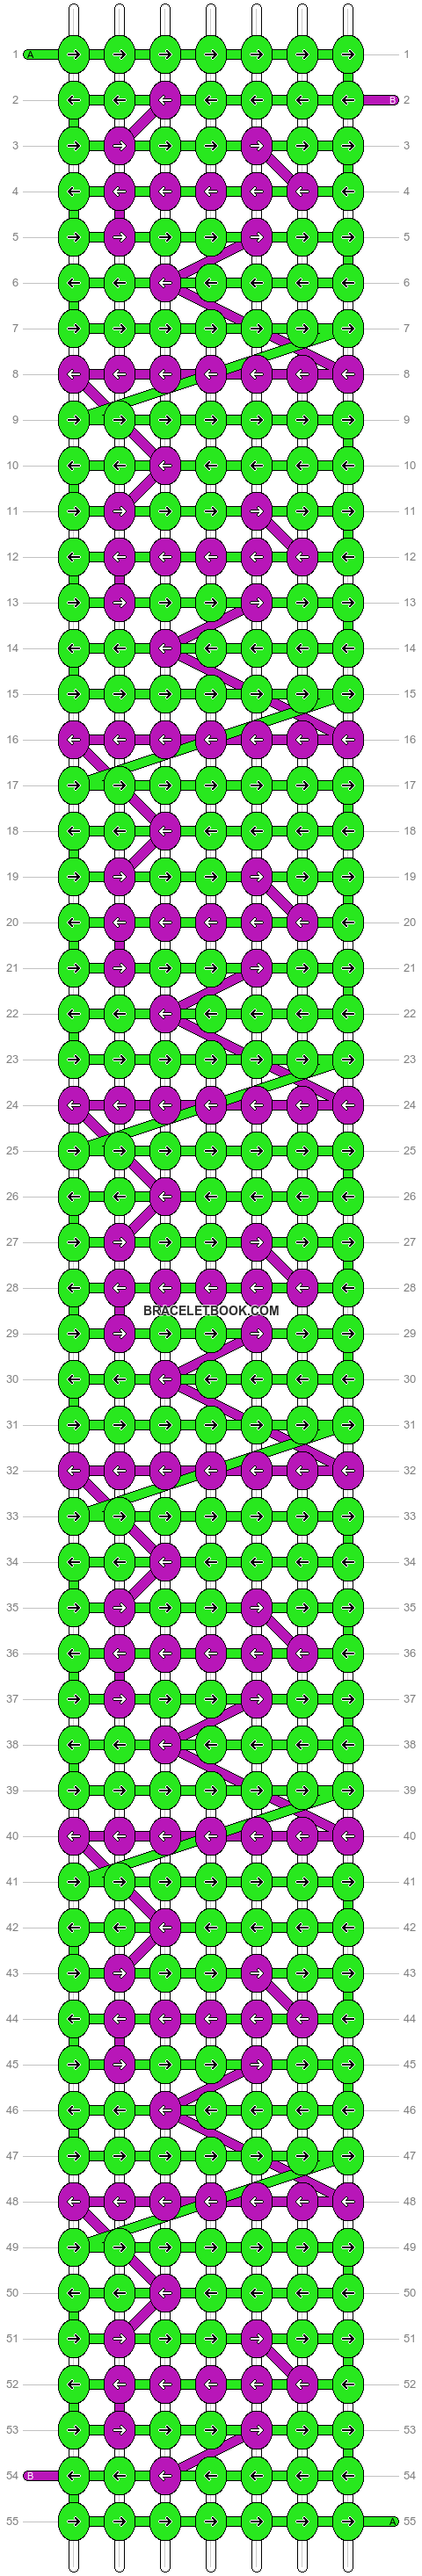 Alpha pattern #8102 variation #31118 pattern